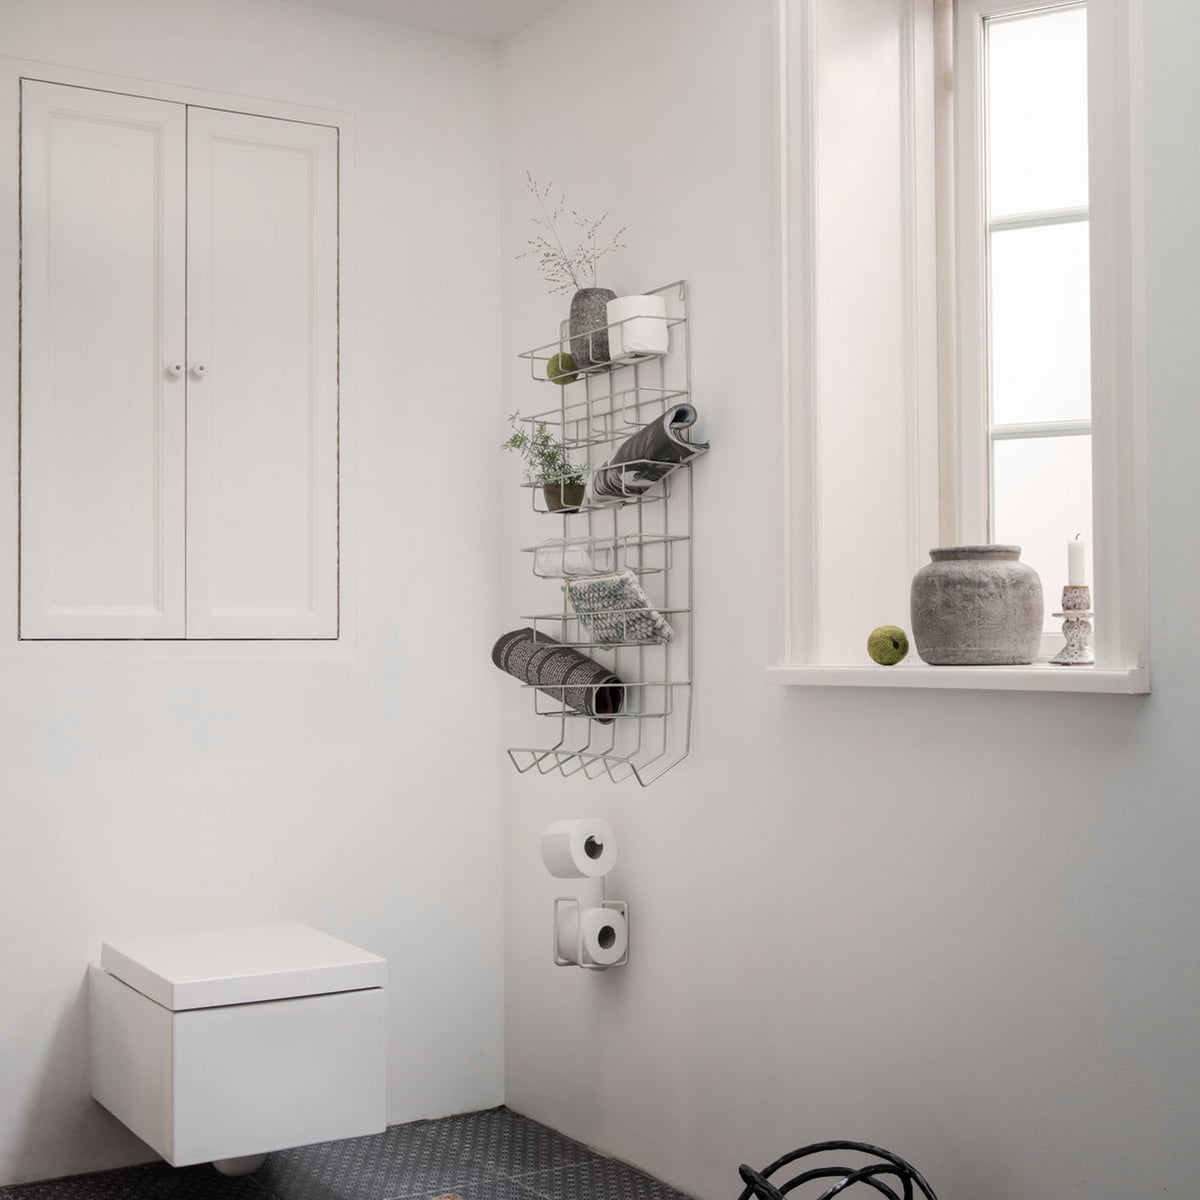 Black Floor Standing Toilet Roll Holder - Ambiente Haus